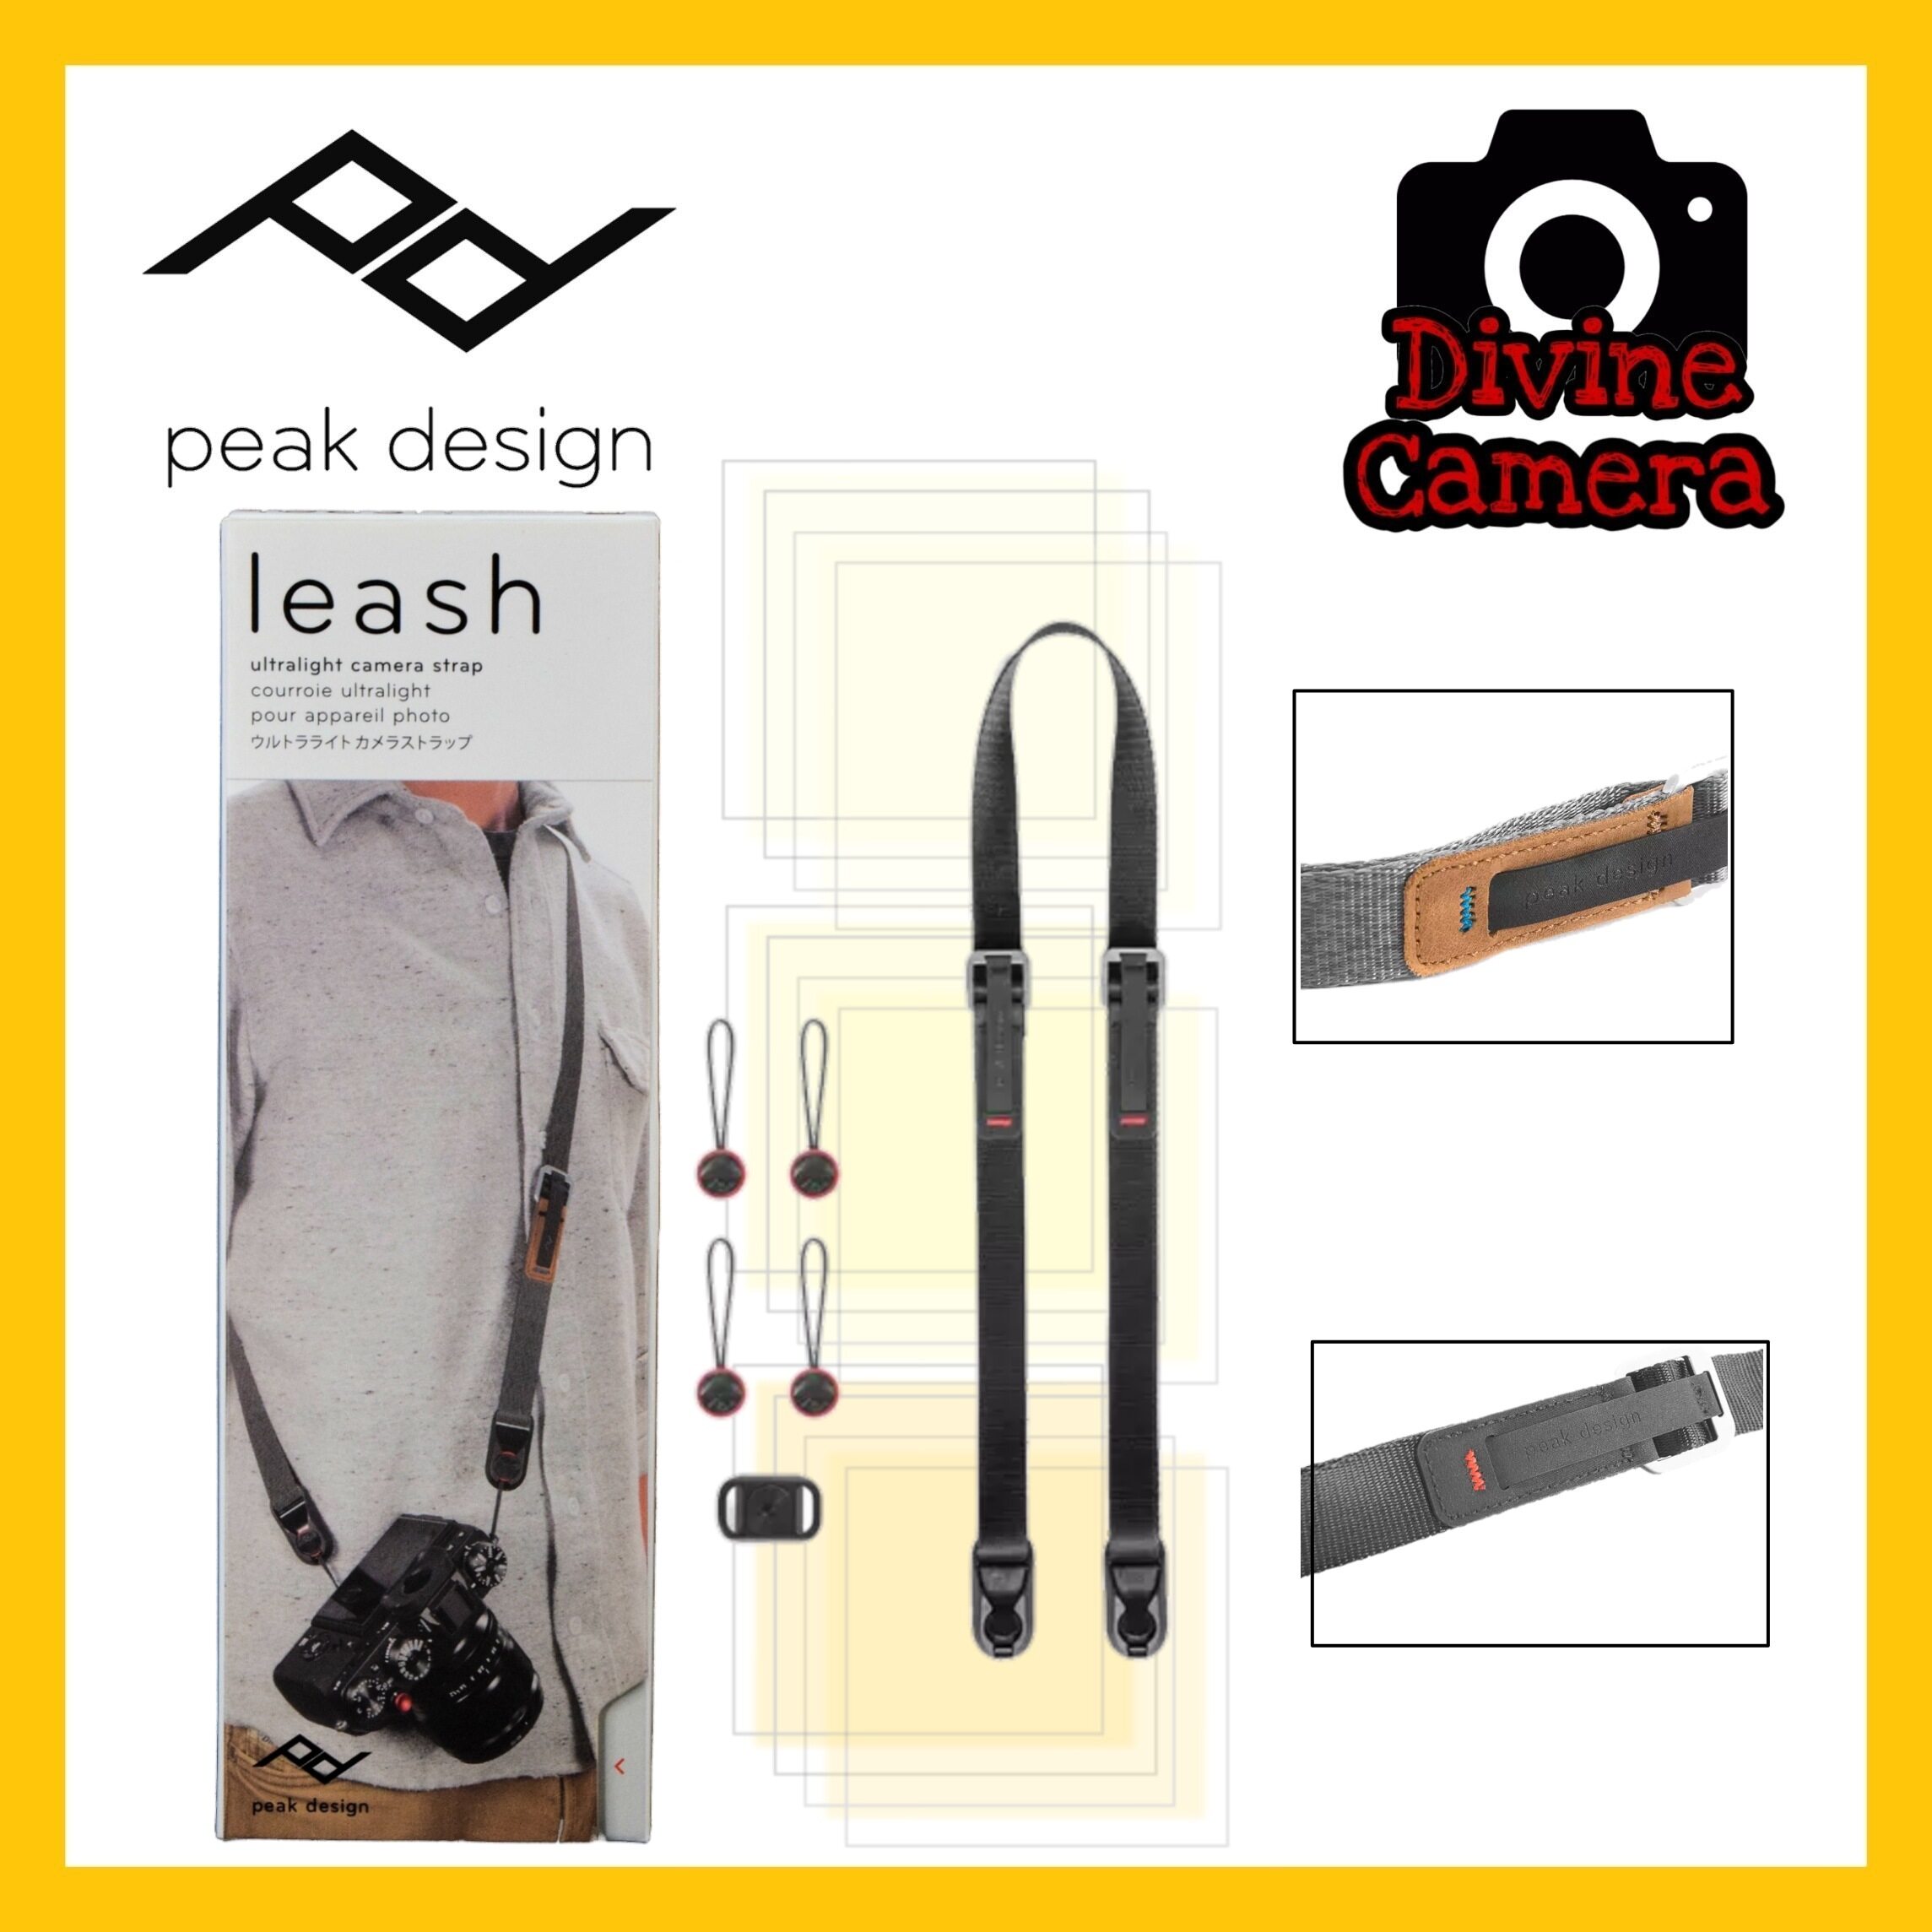 Peak Design Leash Camera Strap